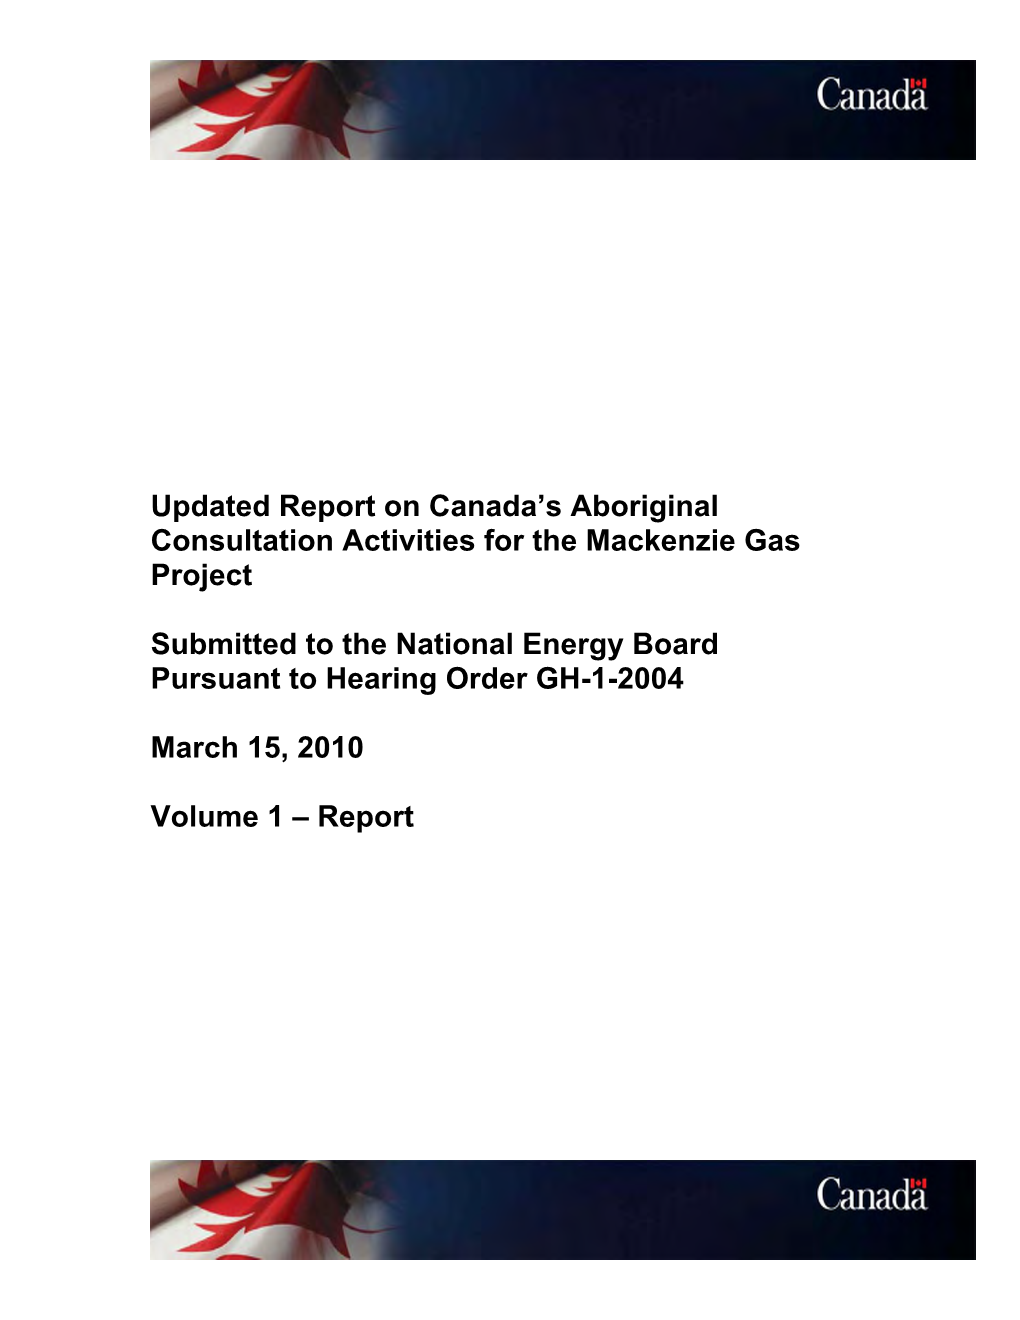 Updated Report on Canada's Aboriginal Consultation Activities